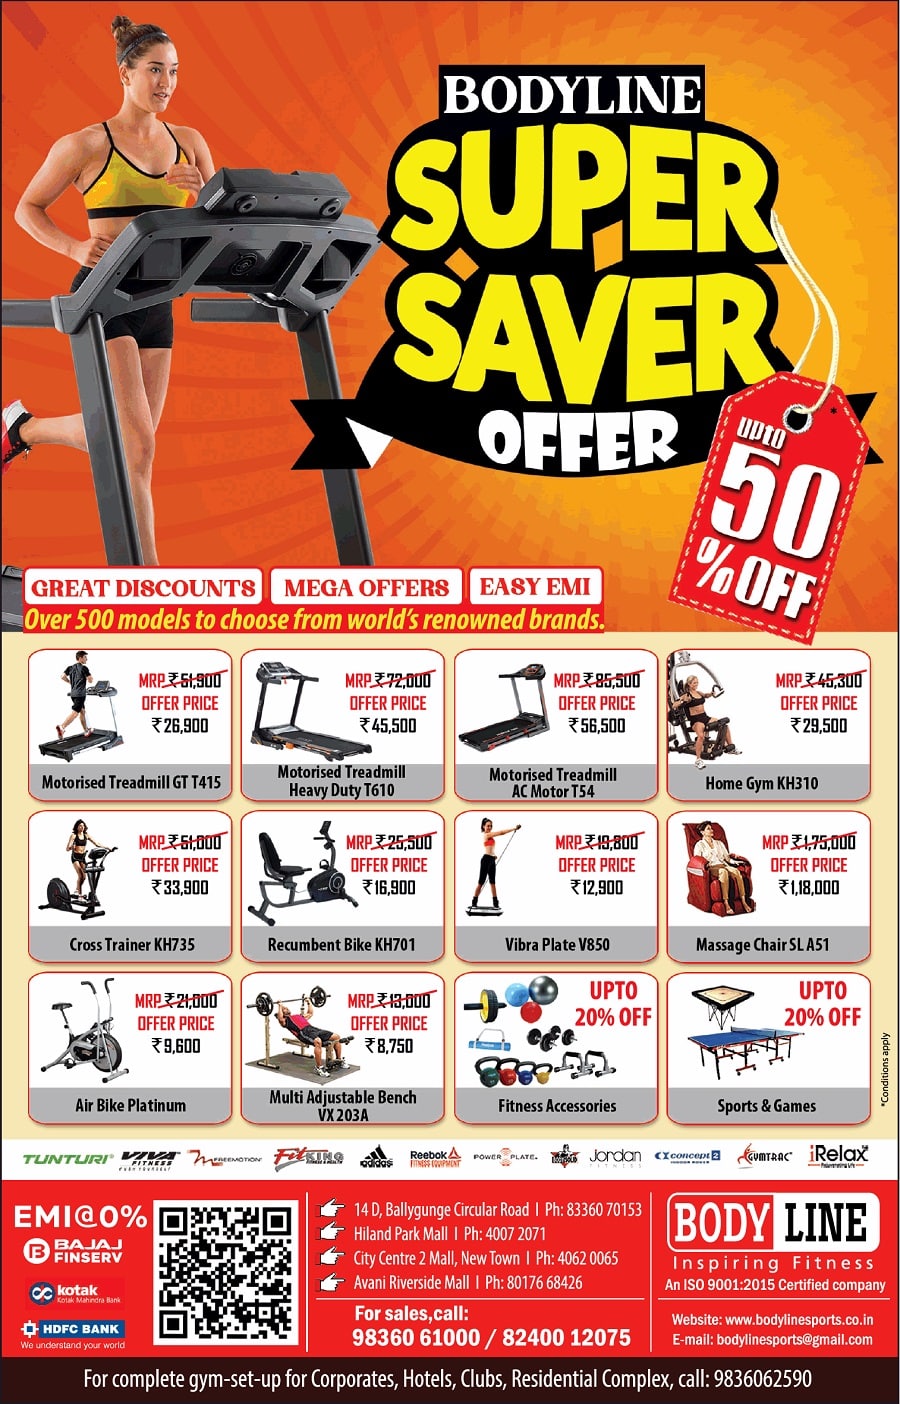 Bodyline Sports Super Saver offer